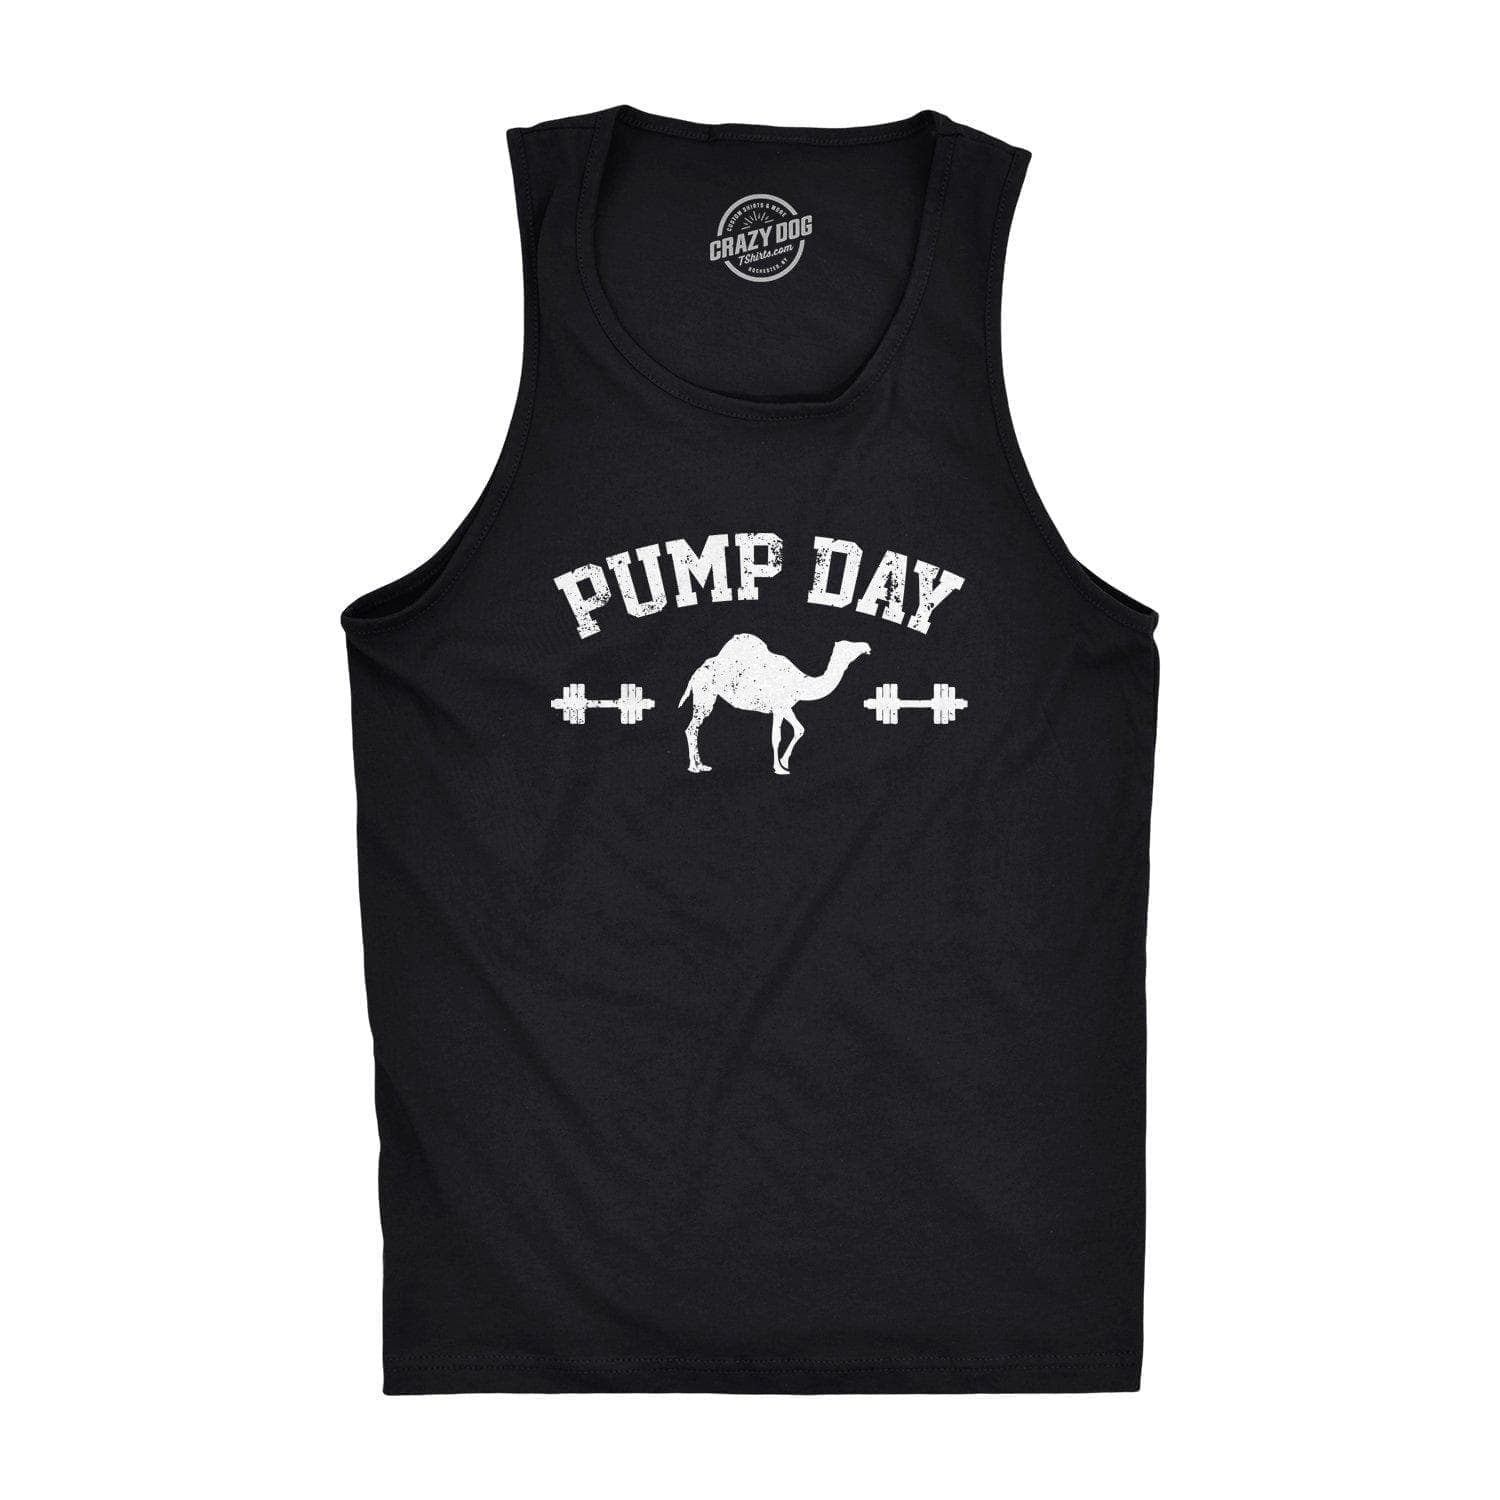 PUMP COVER, Gym Shirt, Workout Shirt, Fitness Apparel, Funny